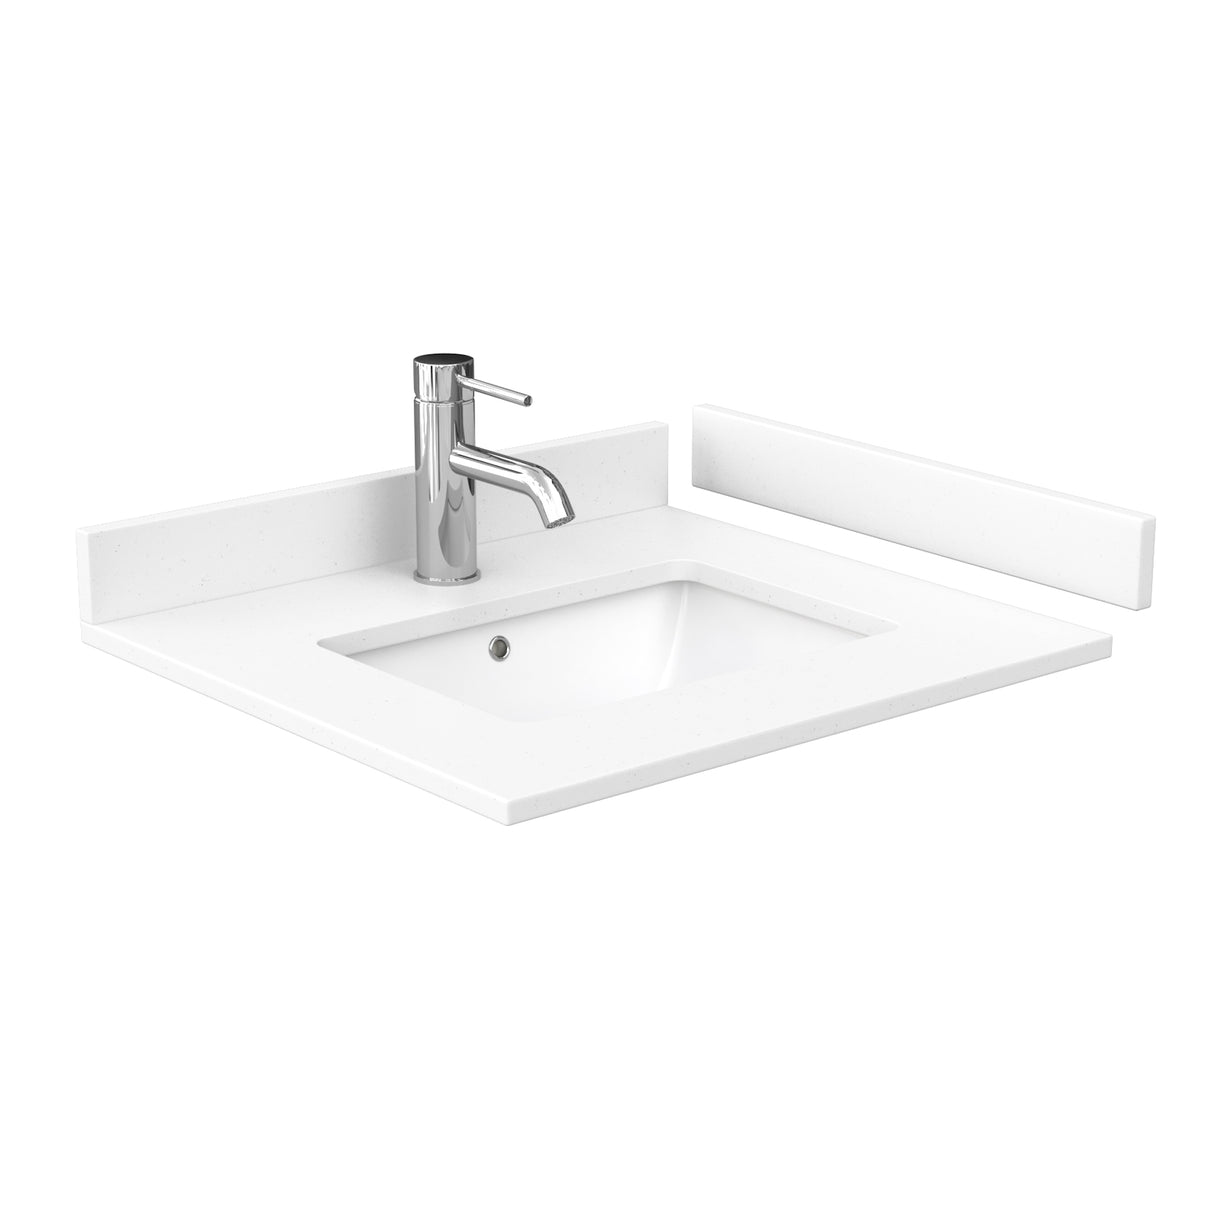 Beckett 24 Inch Single Bathroom Vanity in White White Cultured Marble Countertop Undermount Square Sink Matte Black Trim